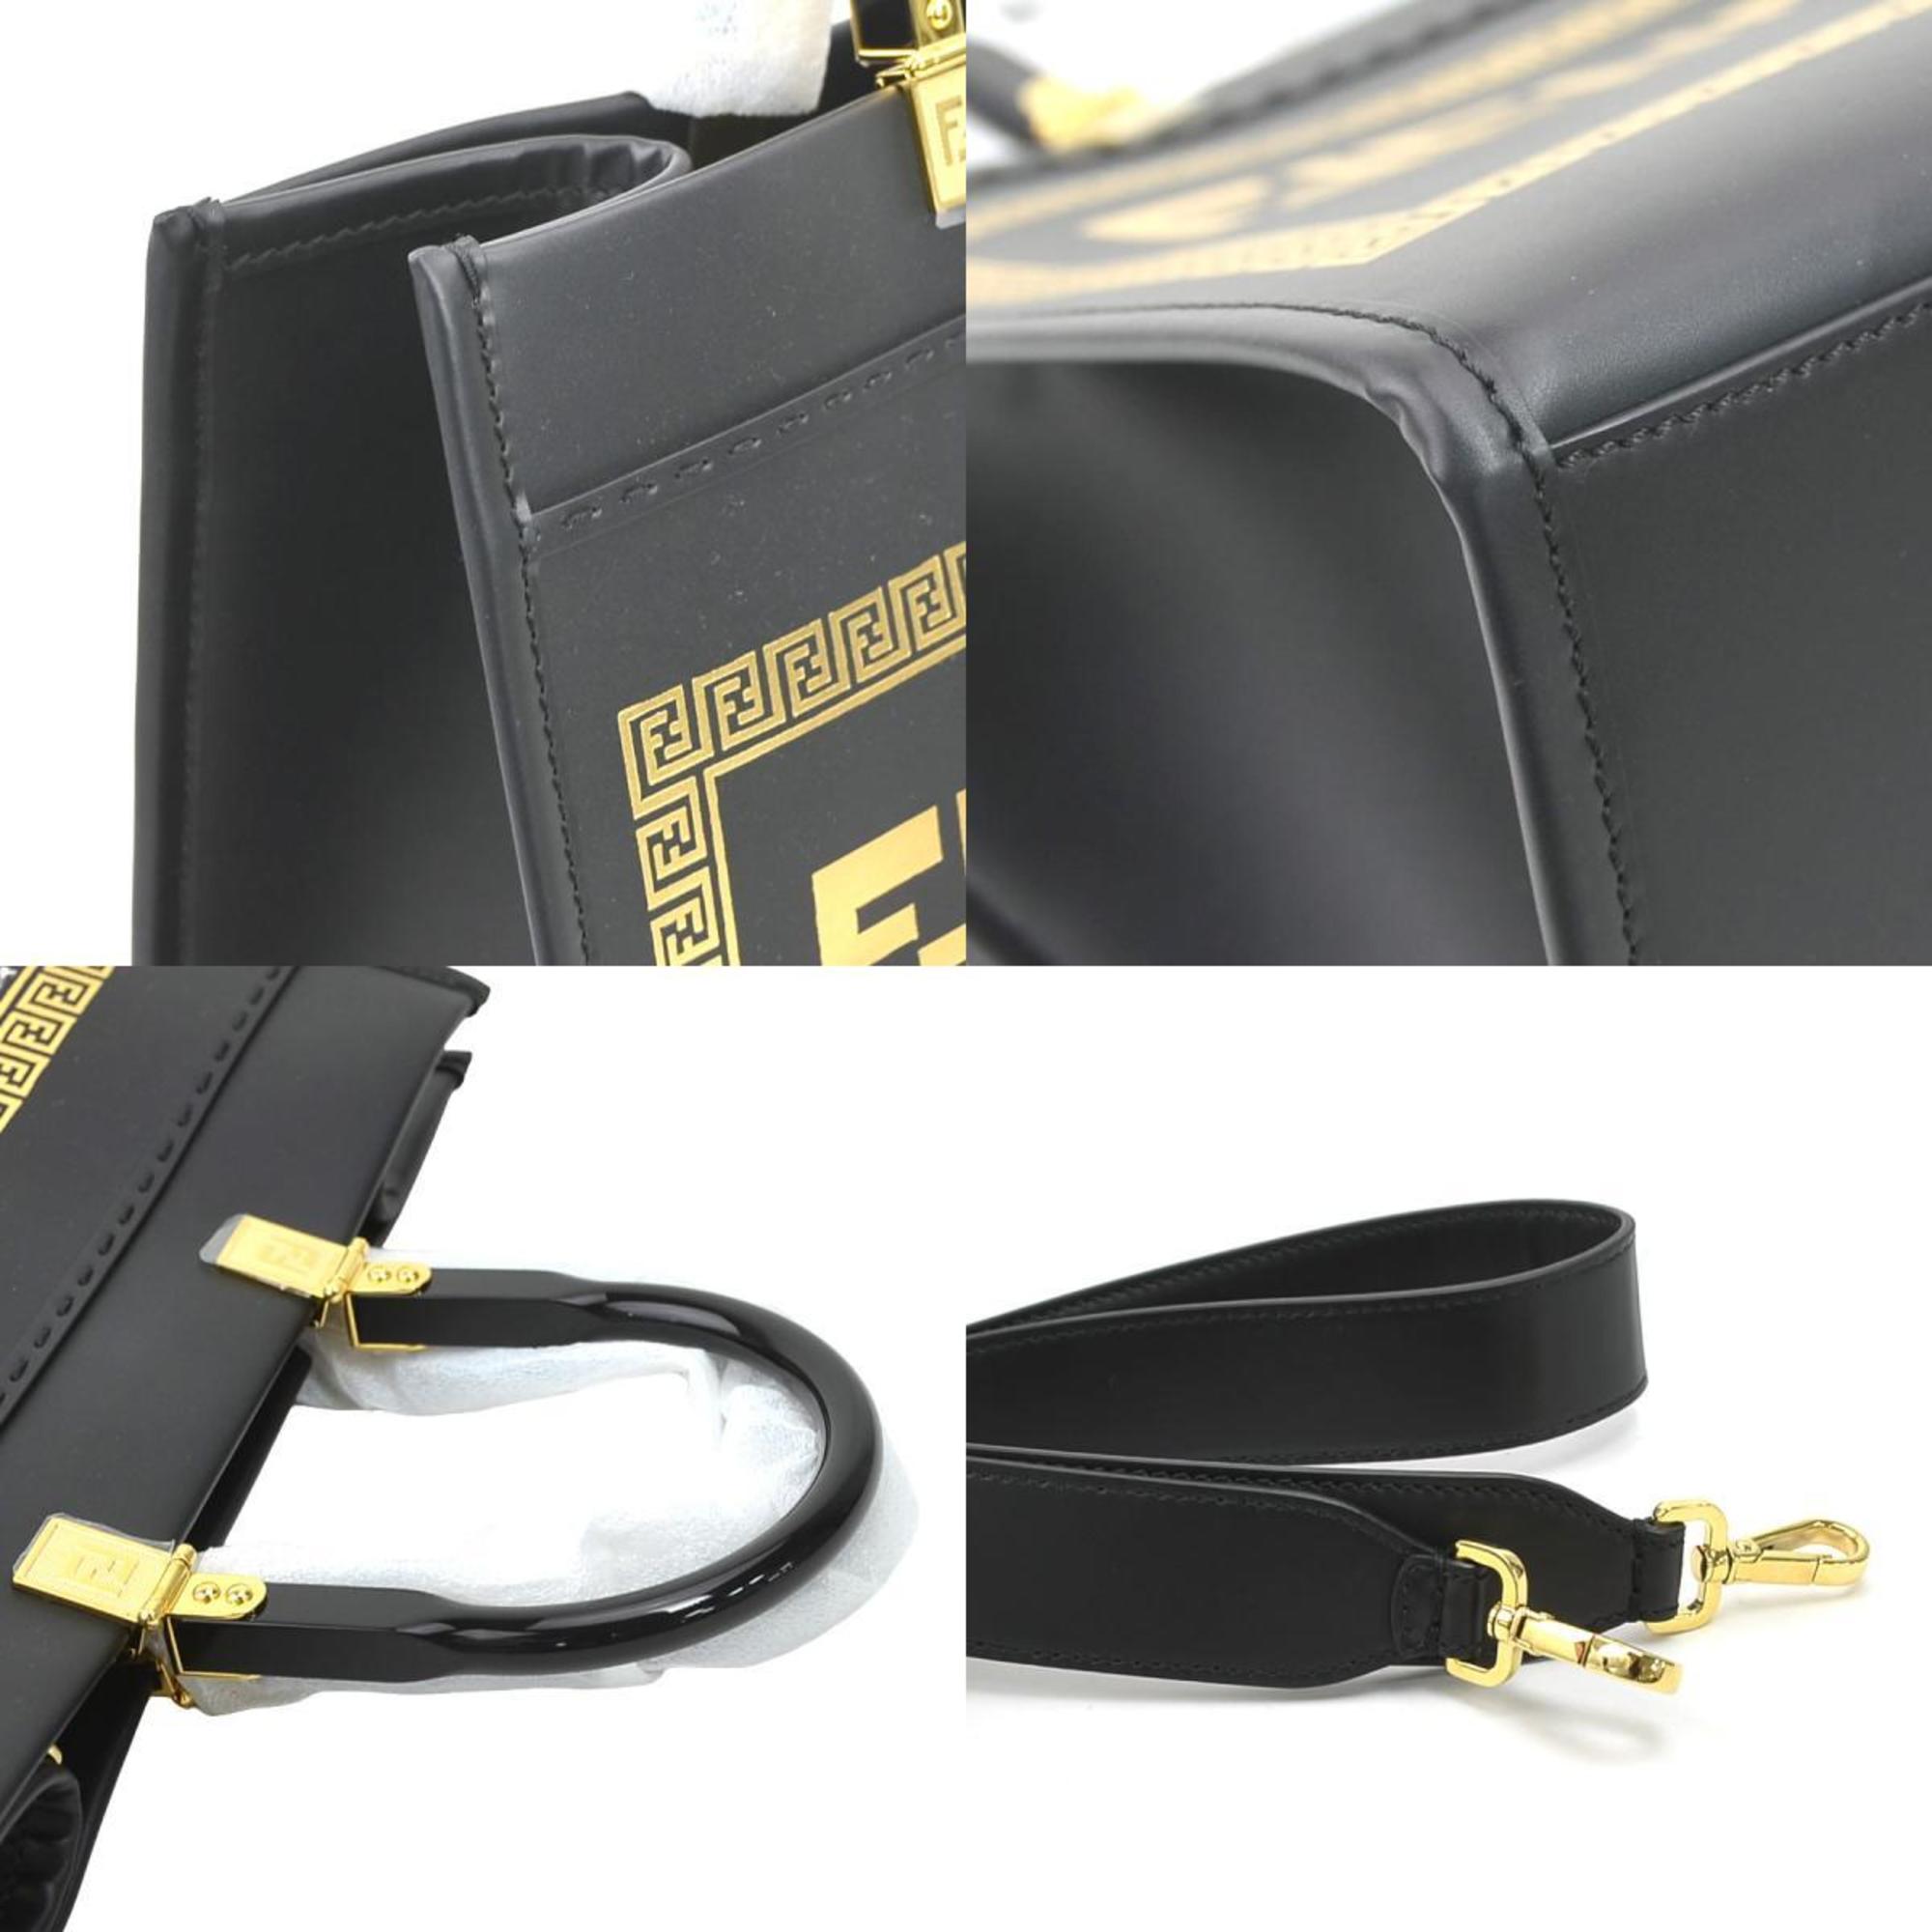 FENDI handbag shoulder bag FENDACE Fenderche leather black unisex 8BH386-AJTO 99897j